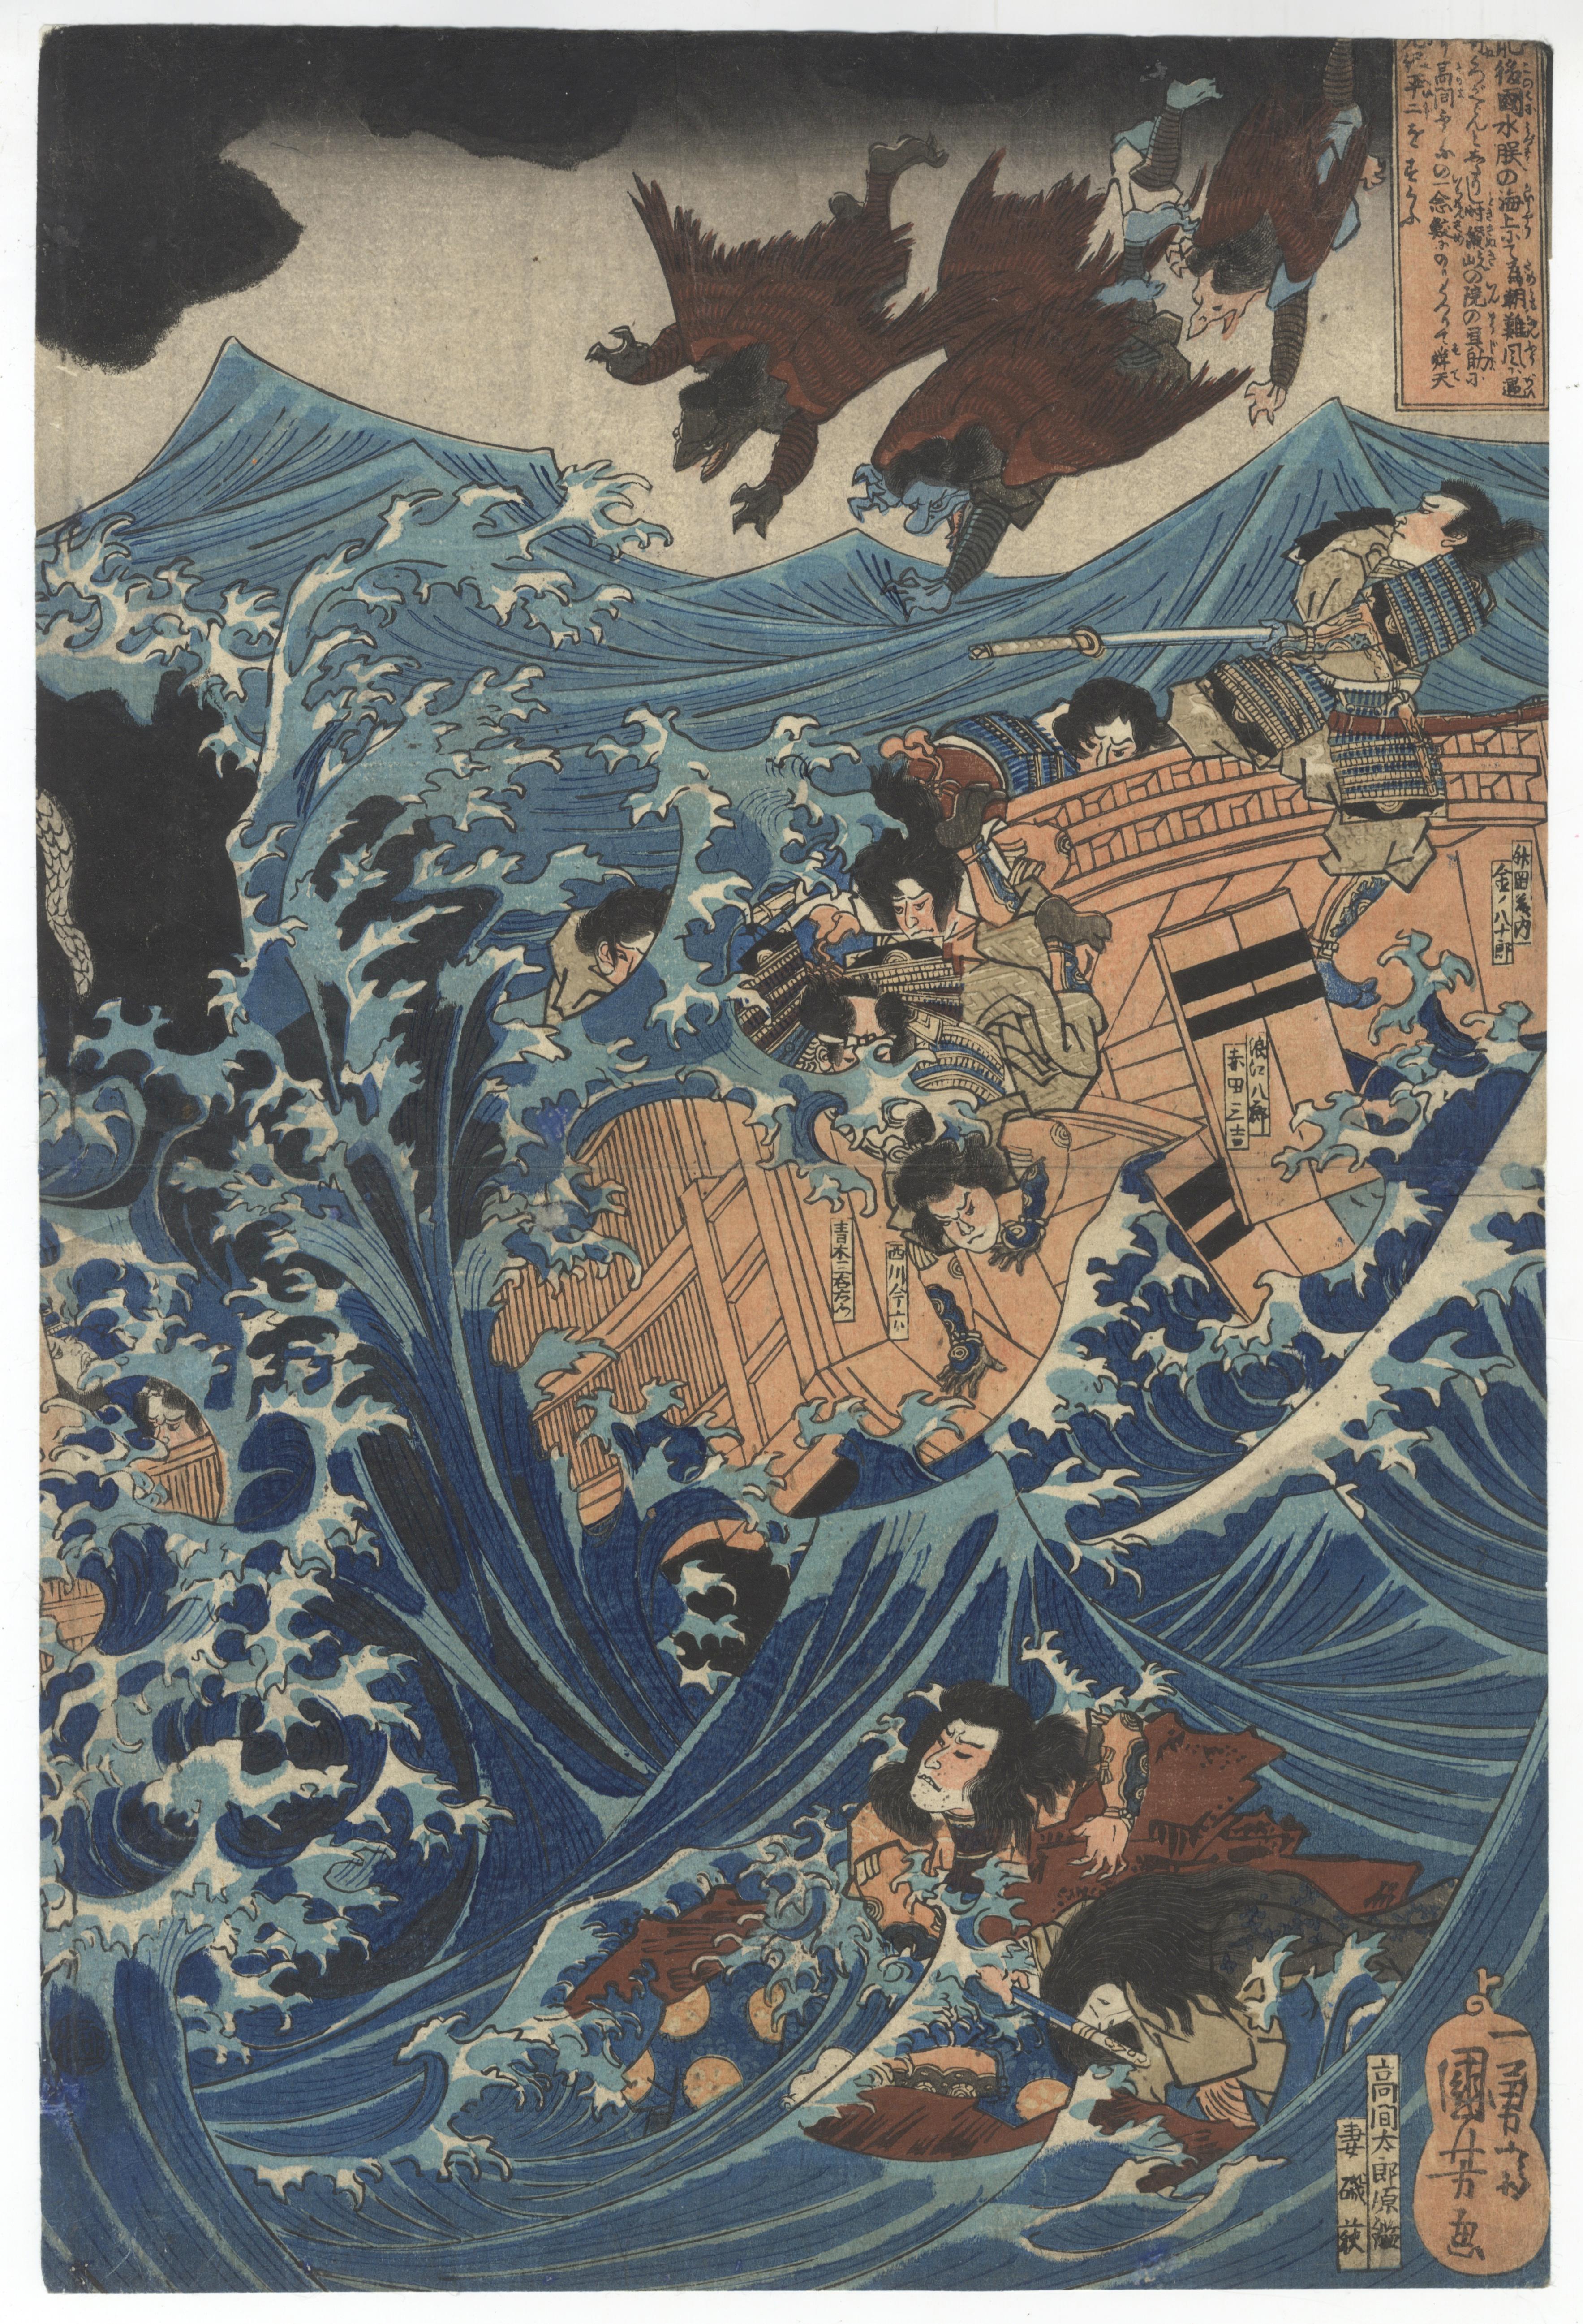 Artist: Kuniyoshi Utagawa (1798 - 1861)
Title: On the Sea at Mizumata in Higo Province, Minamoto no Tametomo is Shipwrecked in a Storm
Date: 1836
(L) 24.7 x 36.9, (C) 24.6 x 37.1, (R) 24.5 x 36.6 cm

According to coastal Japanese folk belief, the